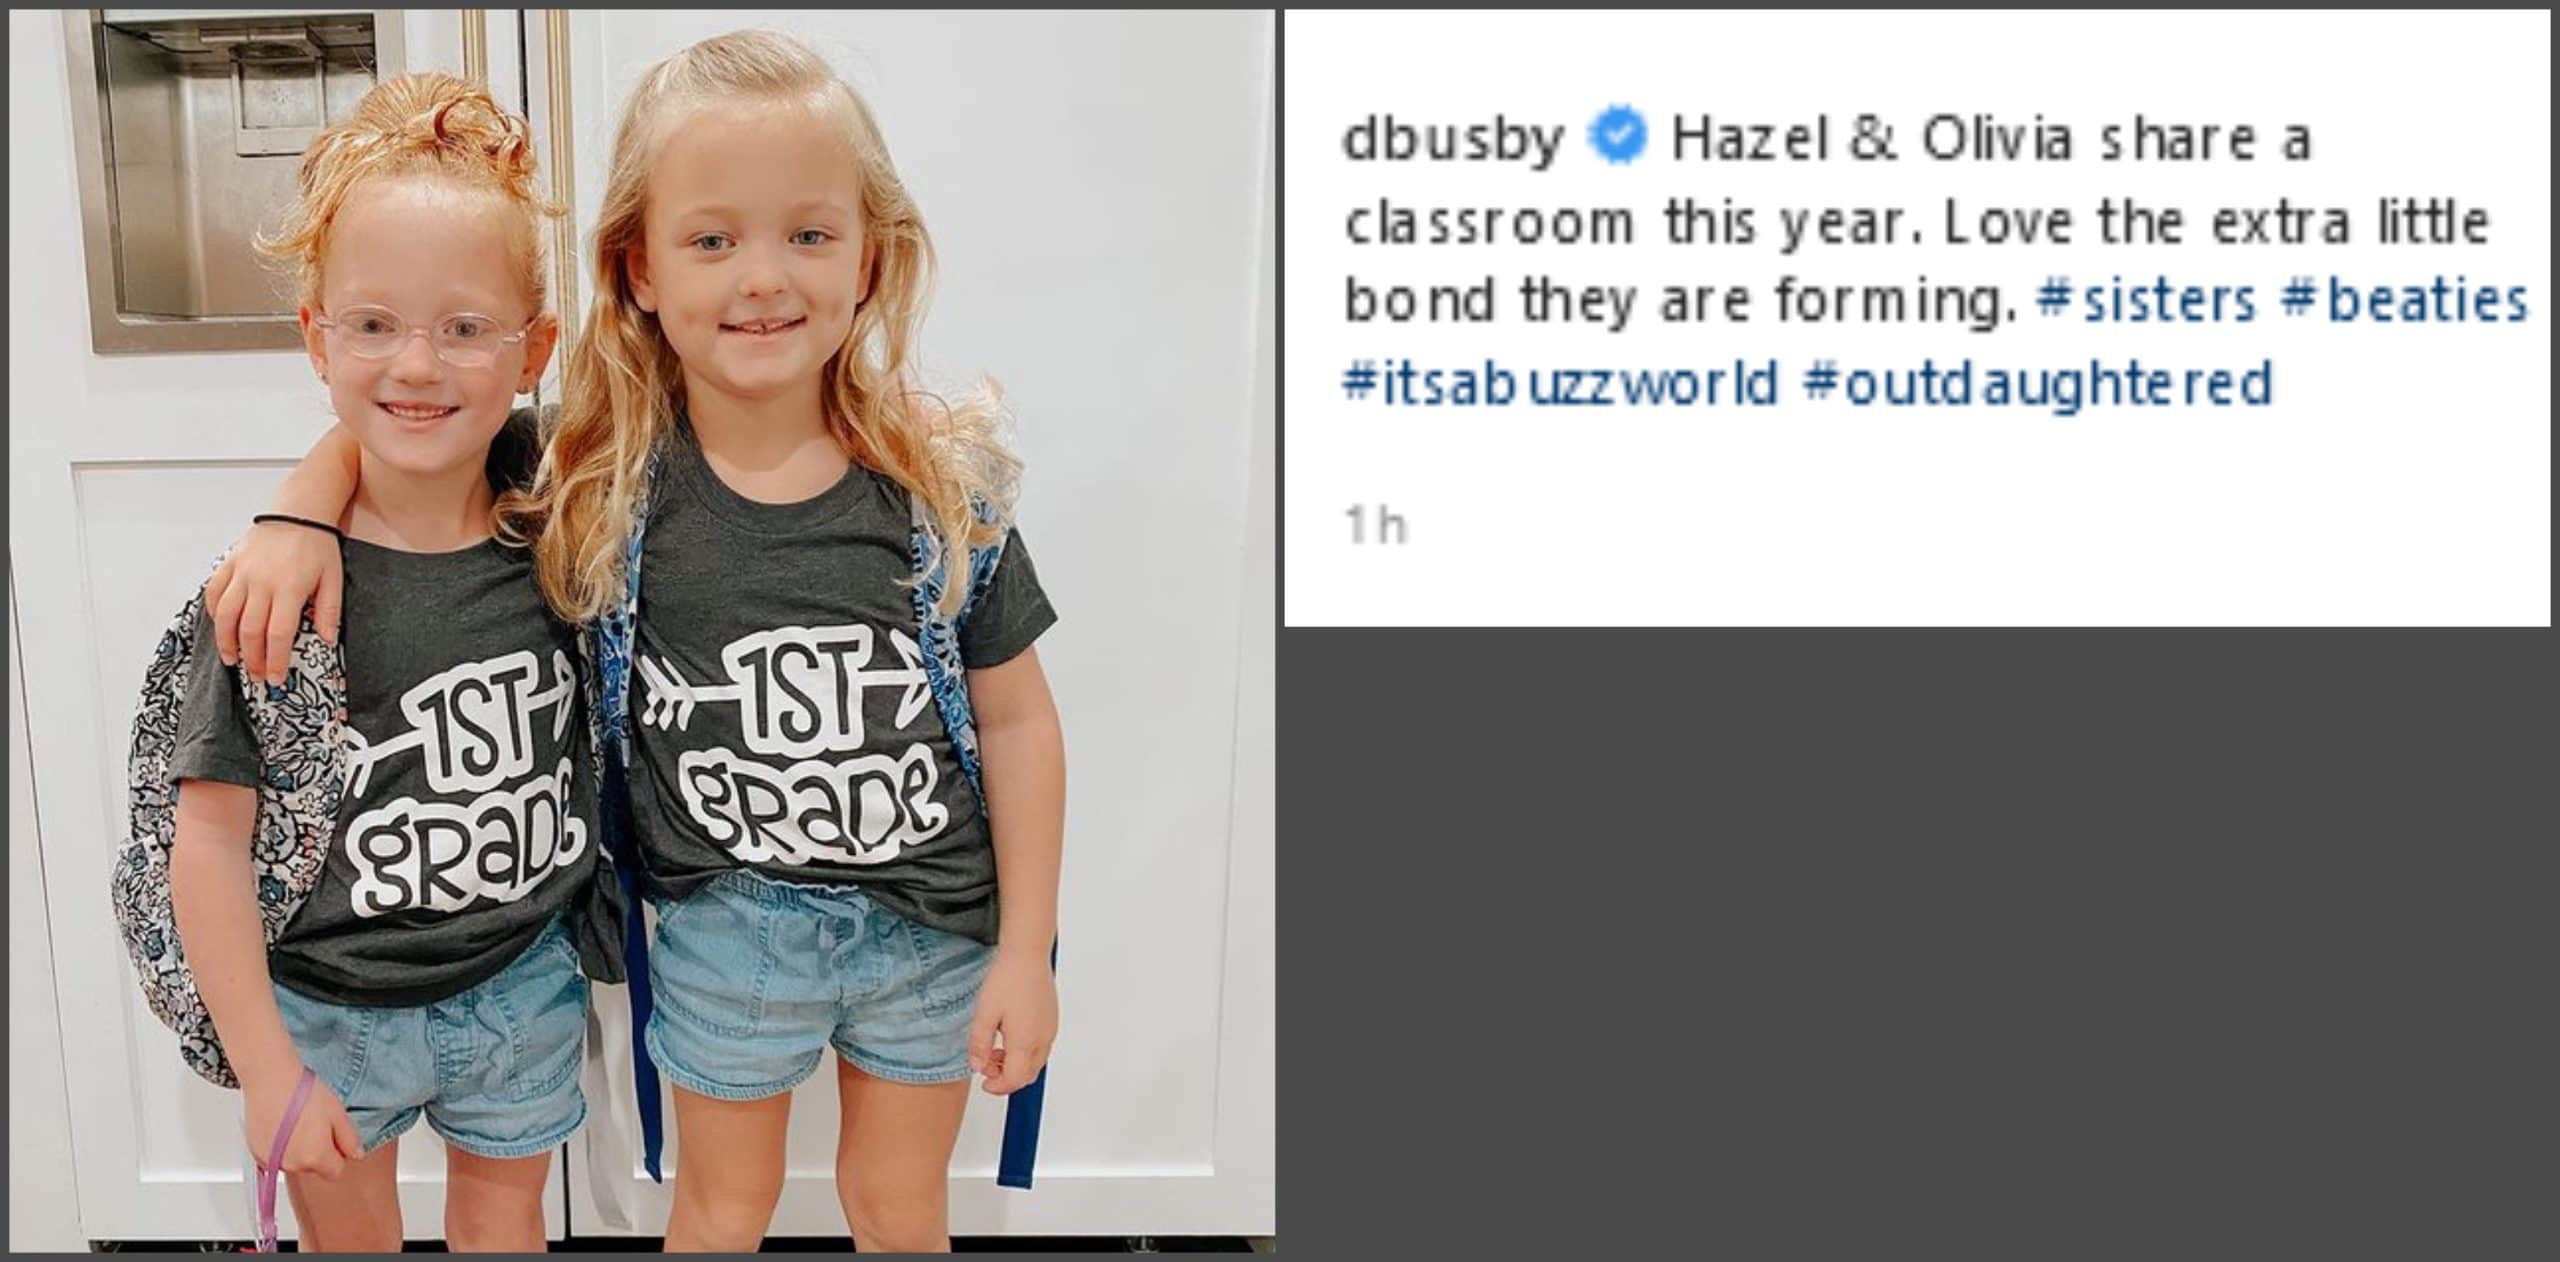 Hazel and Olivia Busby via Instagram